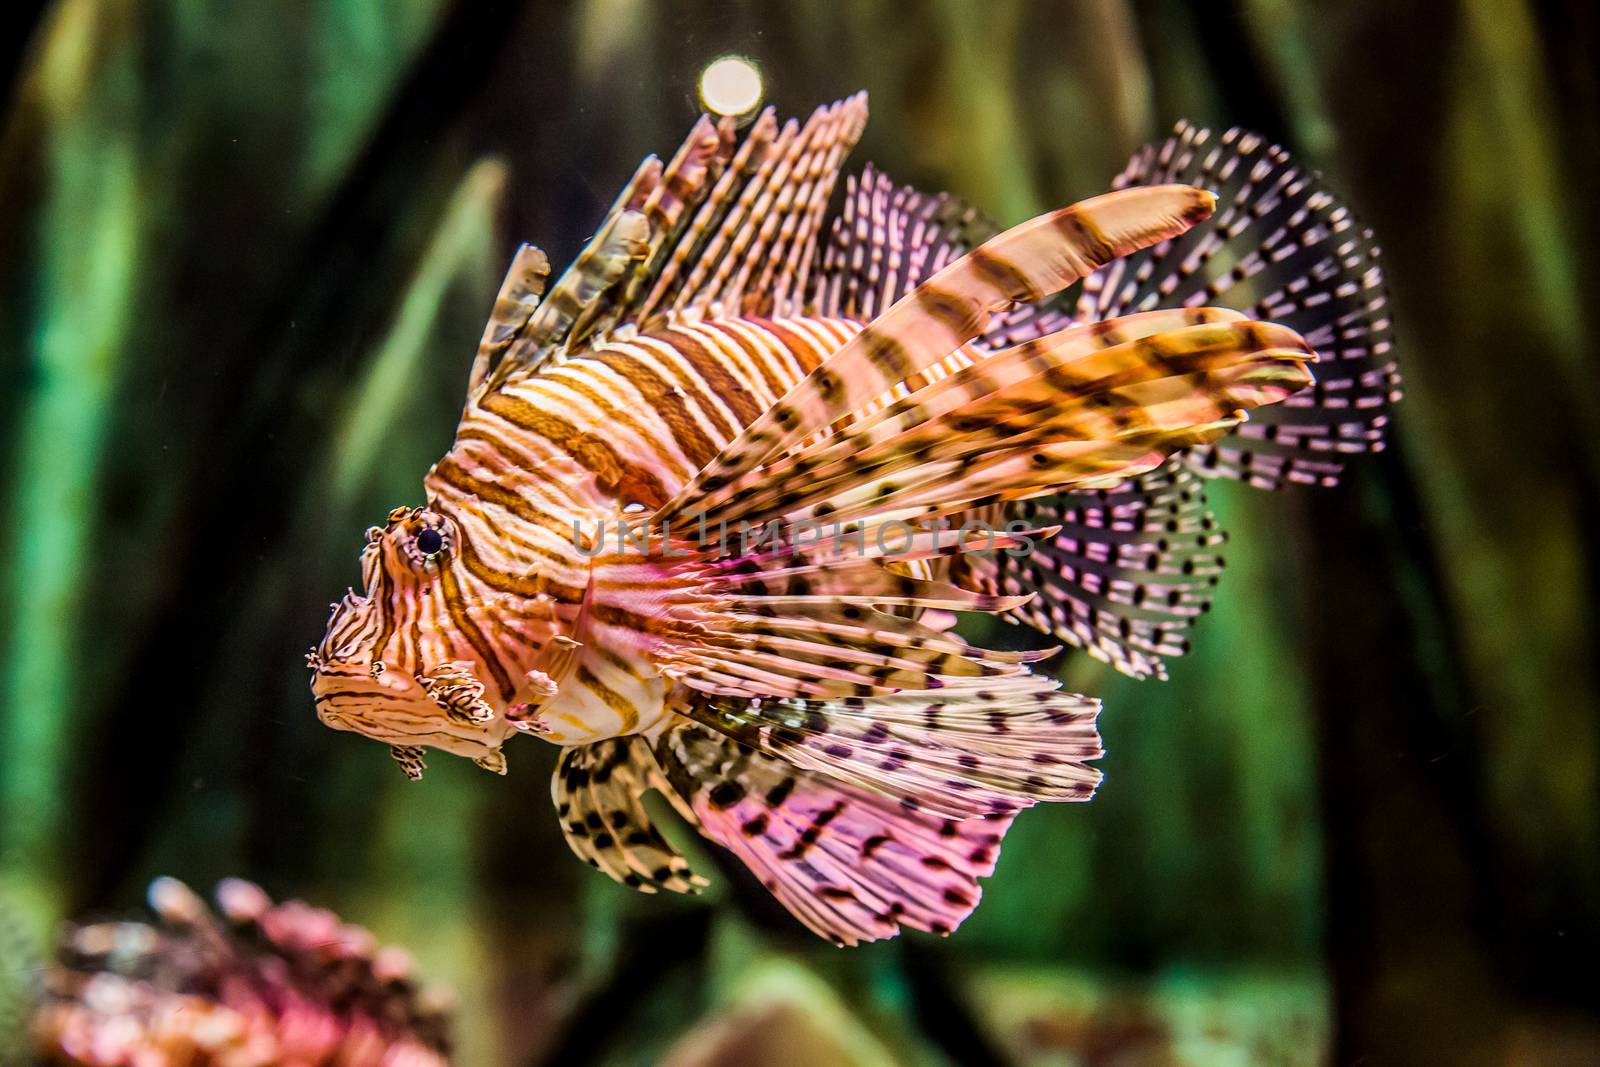 Close up view of a venomous Red lionfish by bloodua